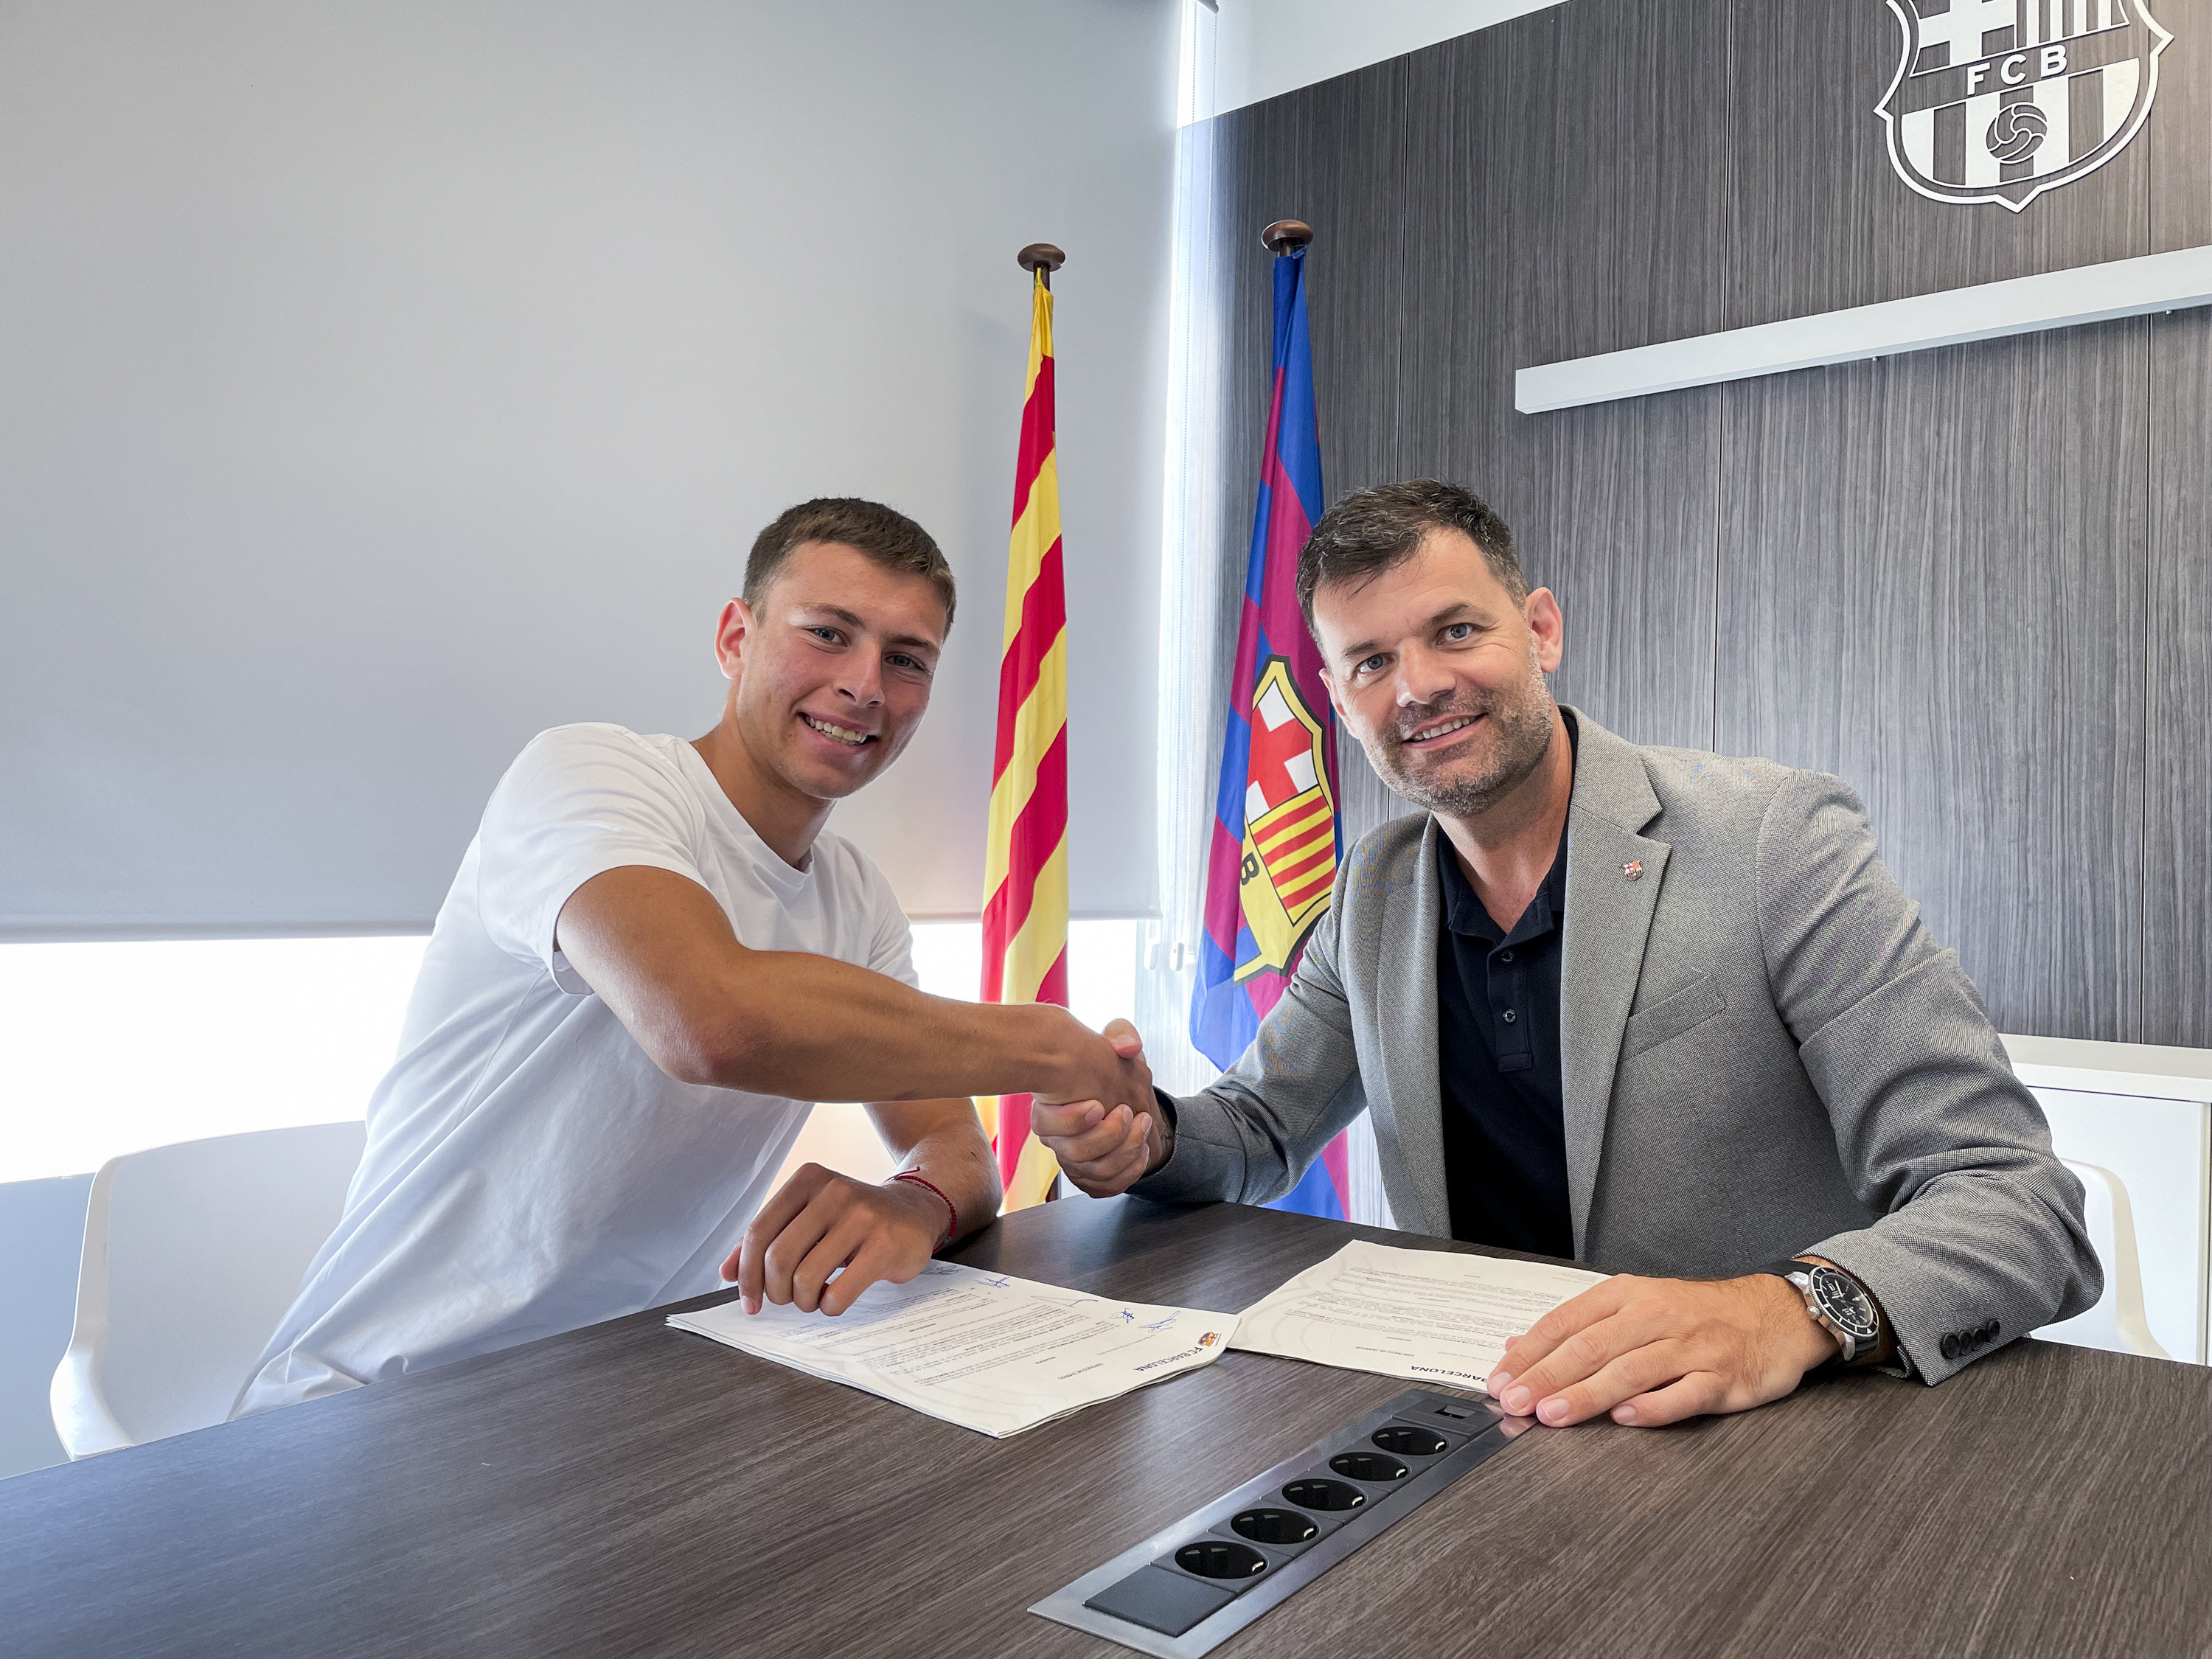 Martin Georgiev firma contrato con el Juvenil del FC Barcelona junto a Joan Soler Ferré / FCB